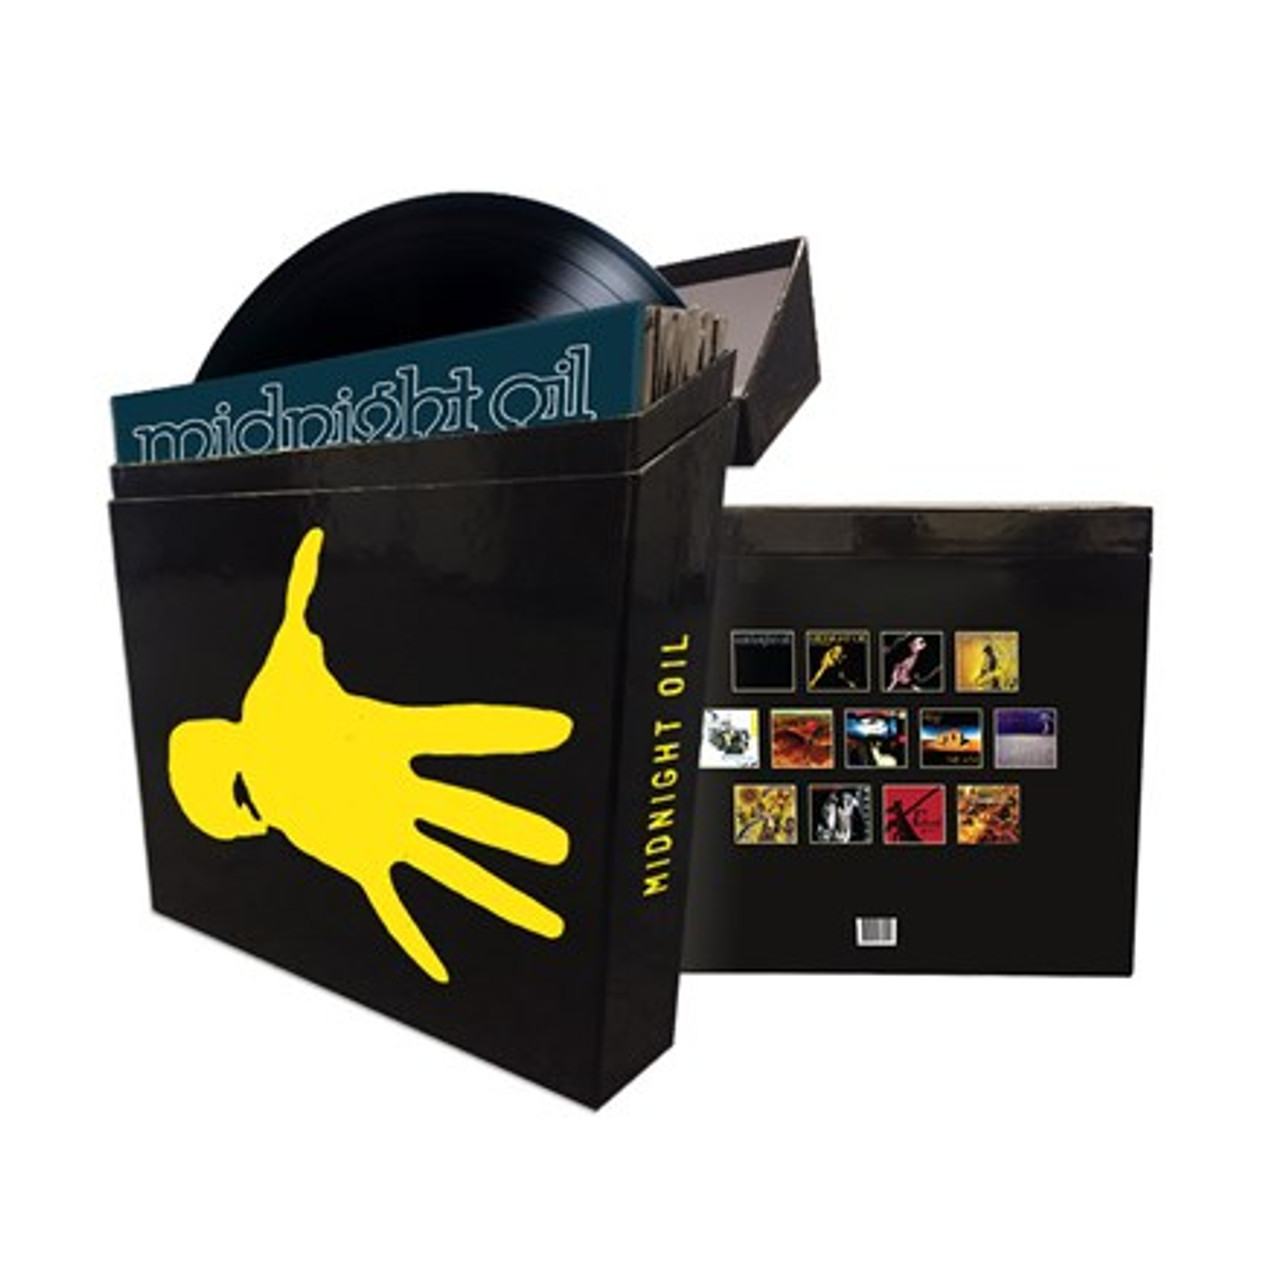 Midnight Oil - The Complete Vinyl Box Set (180g 11LP x EPs Vinyl LP Box Set) - Music Direct